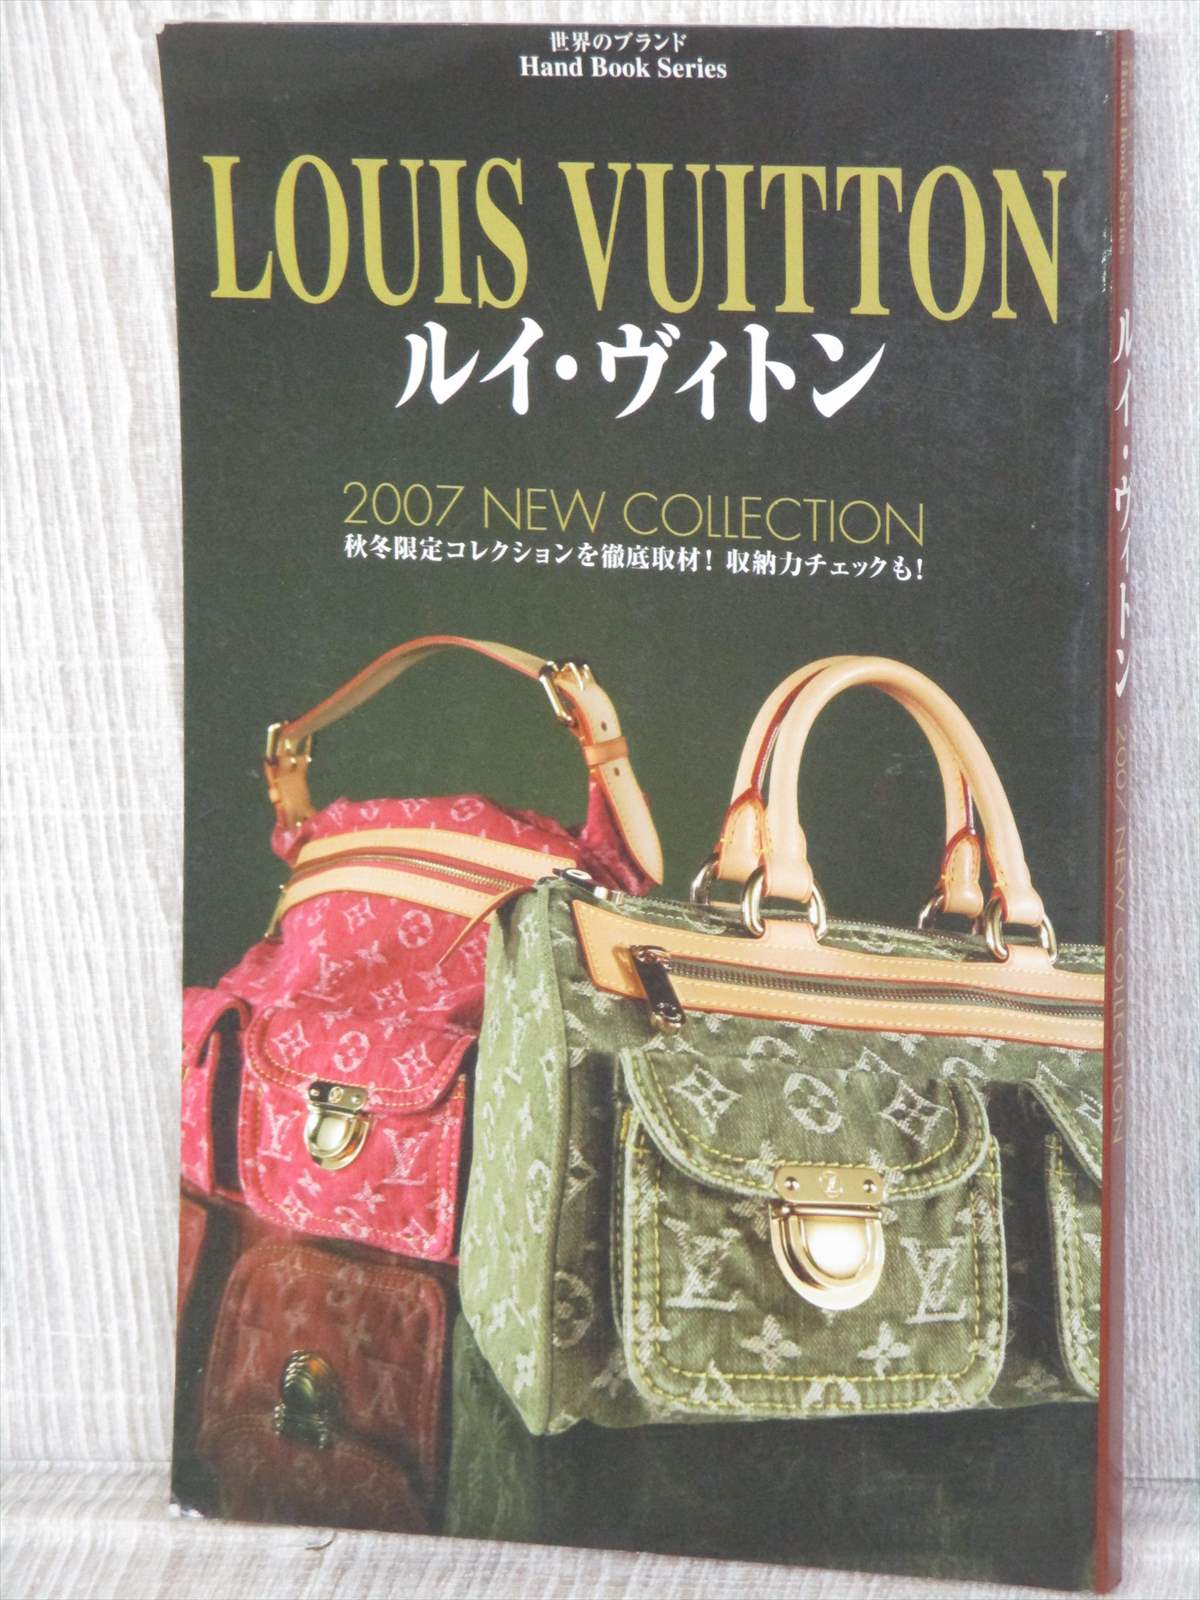 LOUIS VUITTON 2007 New Collection Art Fan Photo Book Guide Catalog Fashion Mode | eBay